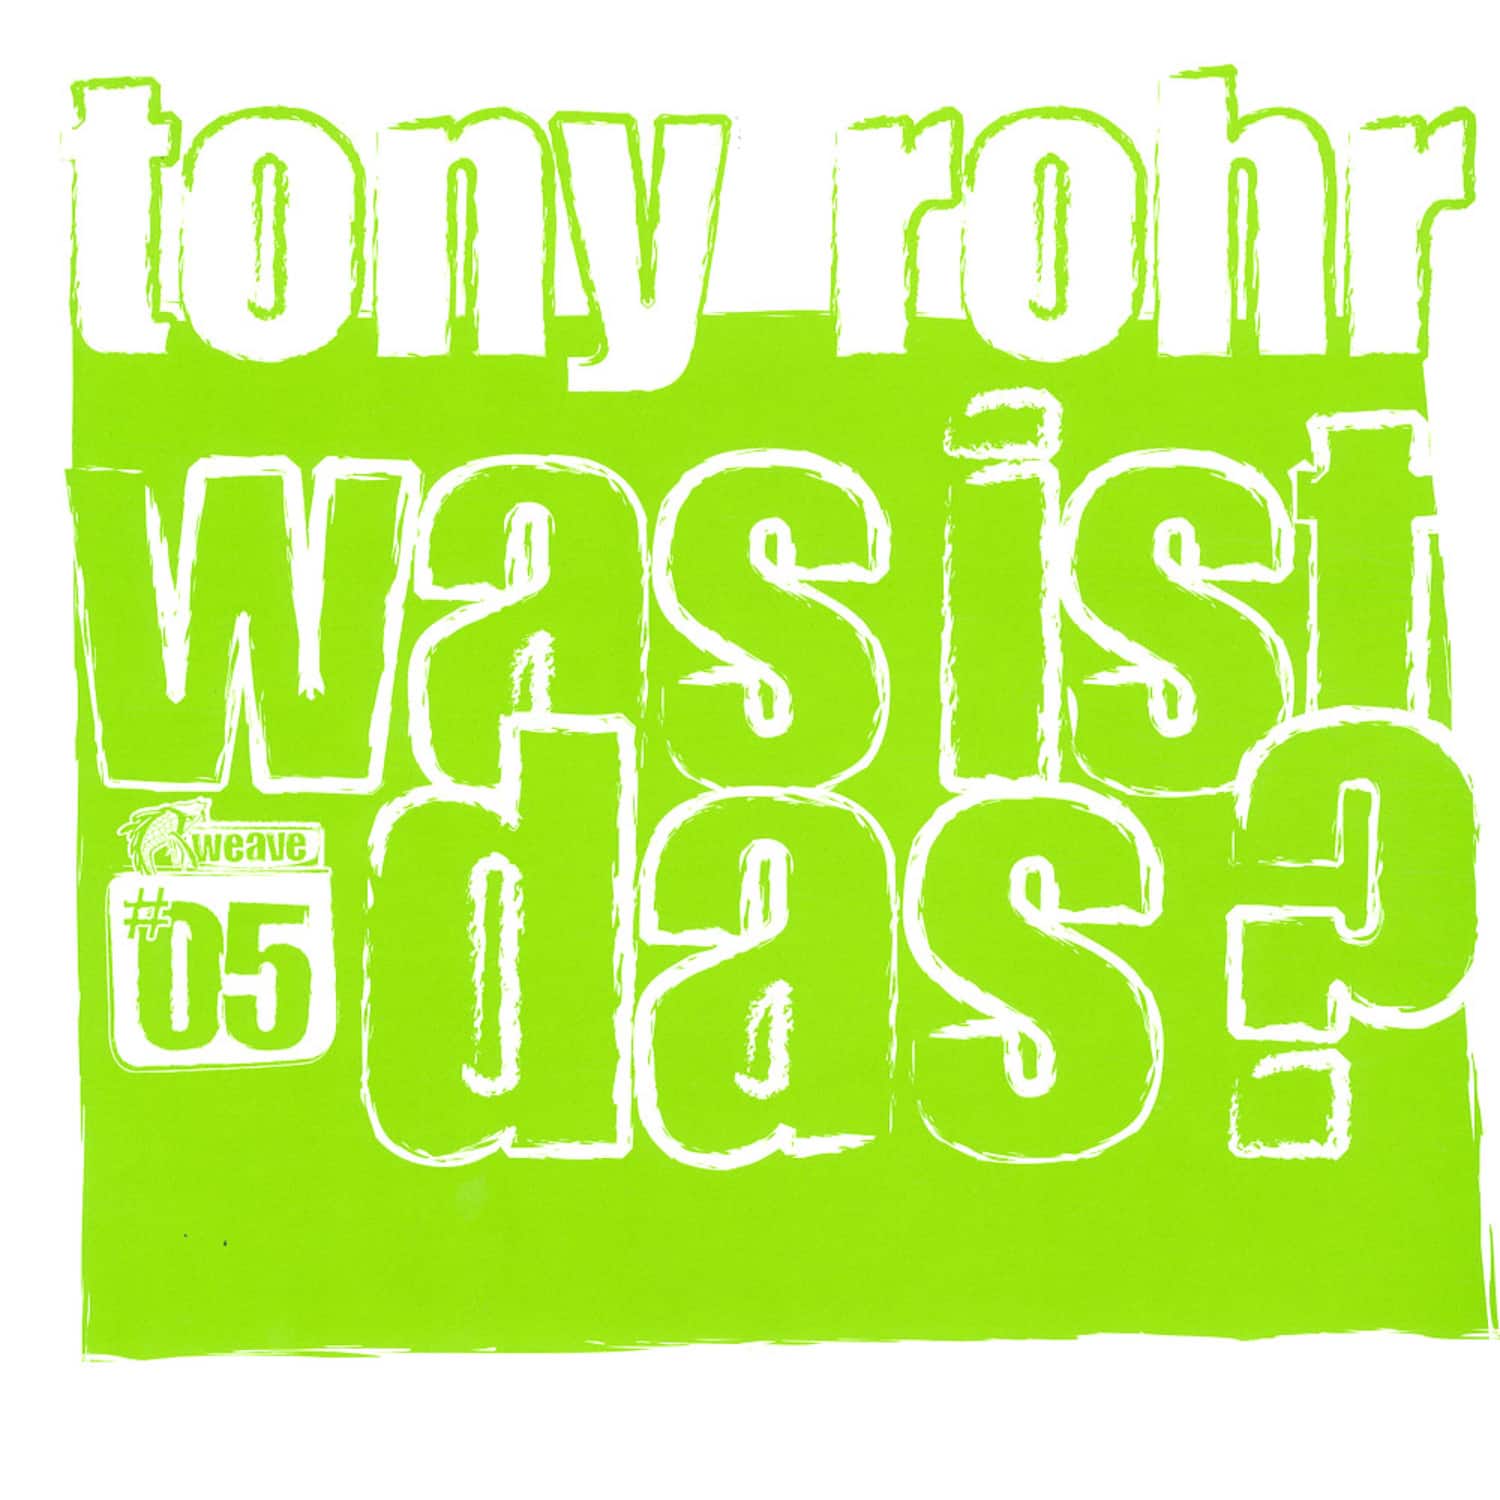 Tony Rohr - WAS IST DAS